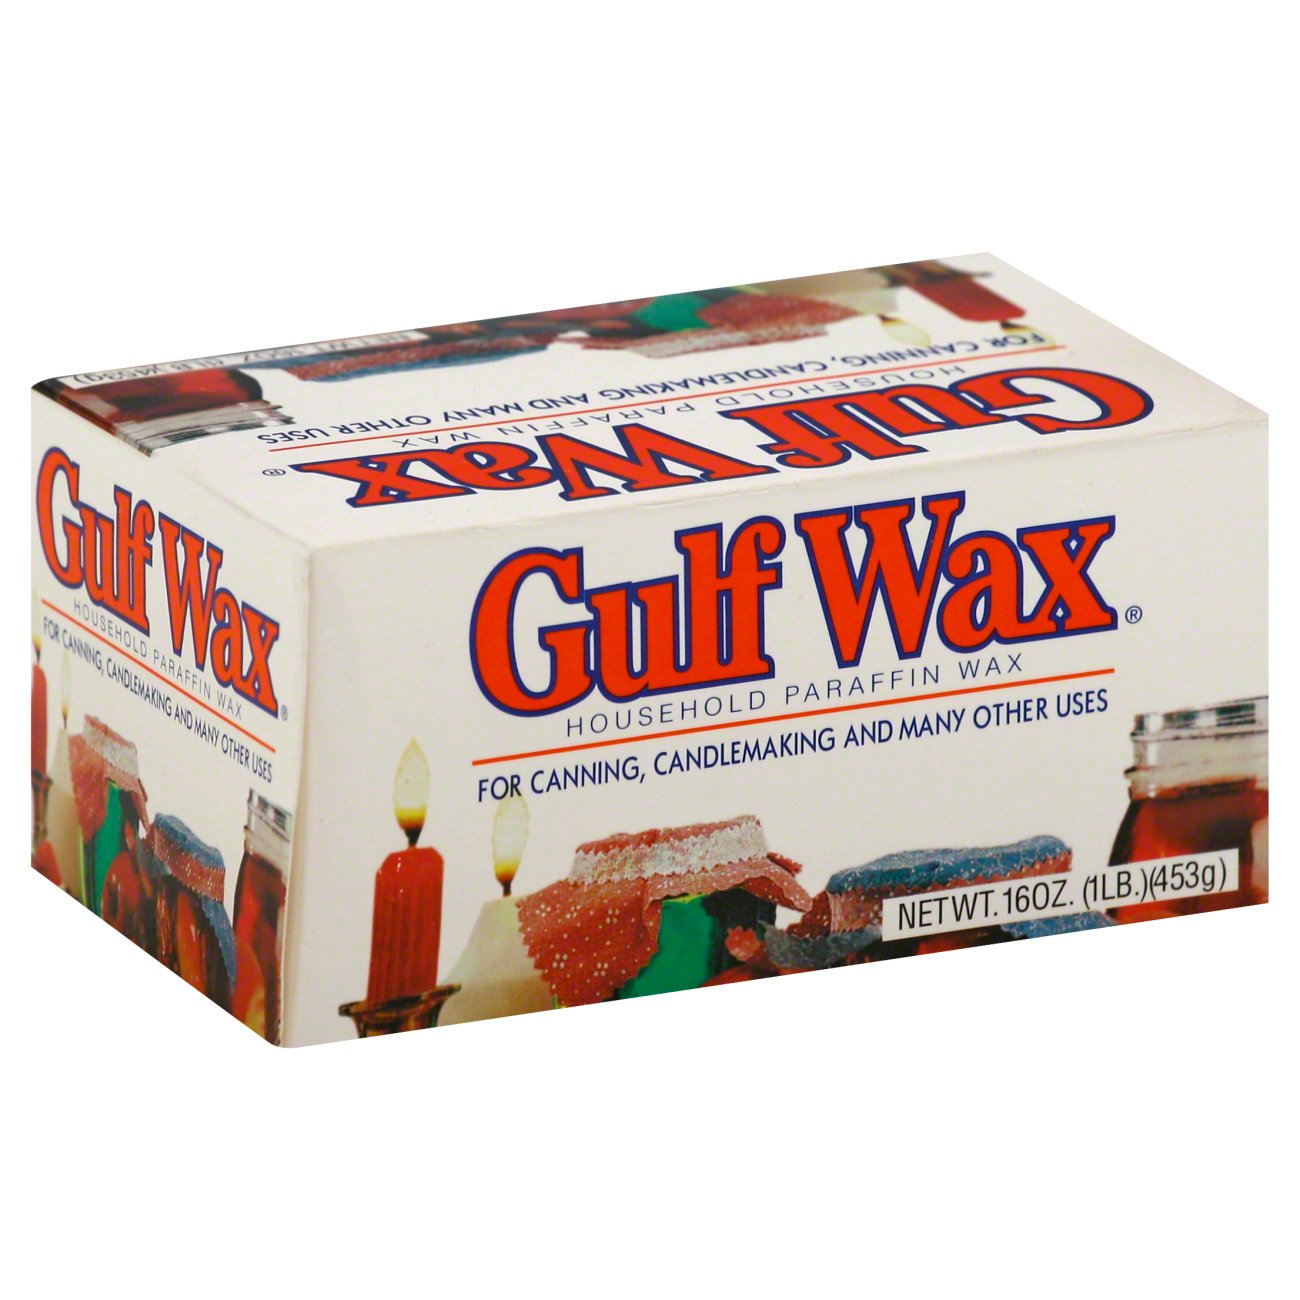 Gulf Wax Household Paraffin Wax